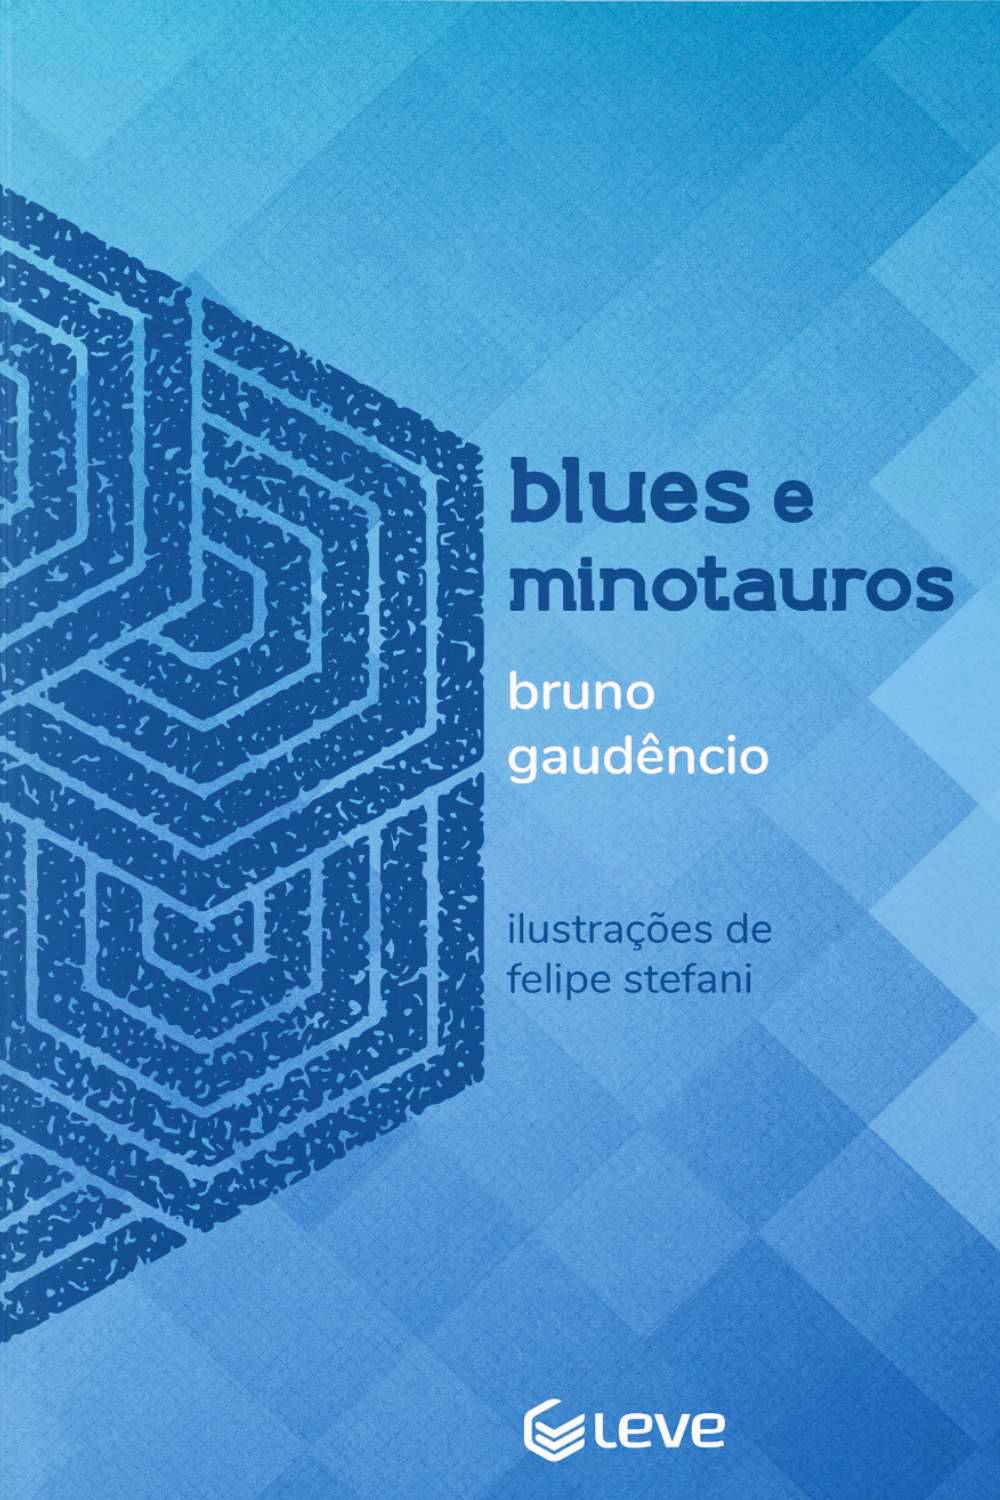 literatura paraibana critica literaria bruno gaudencio livro blues minotauro poesia